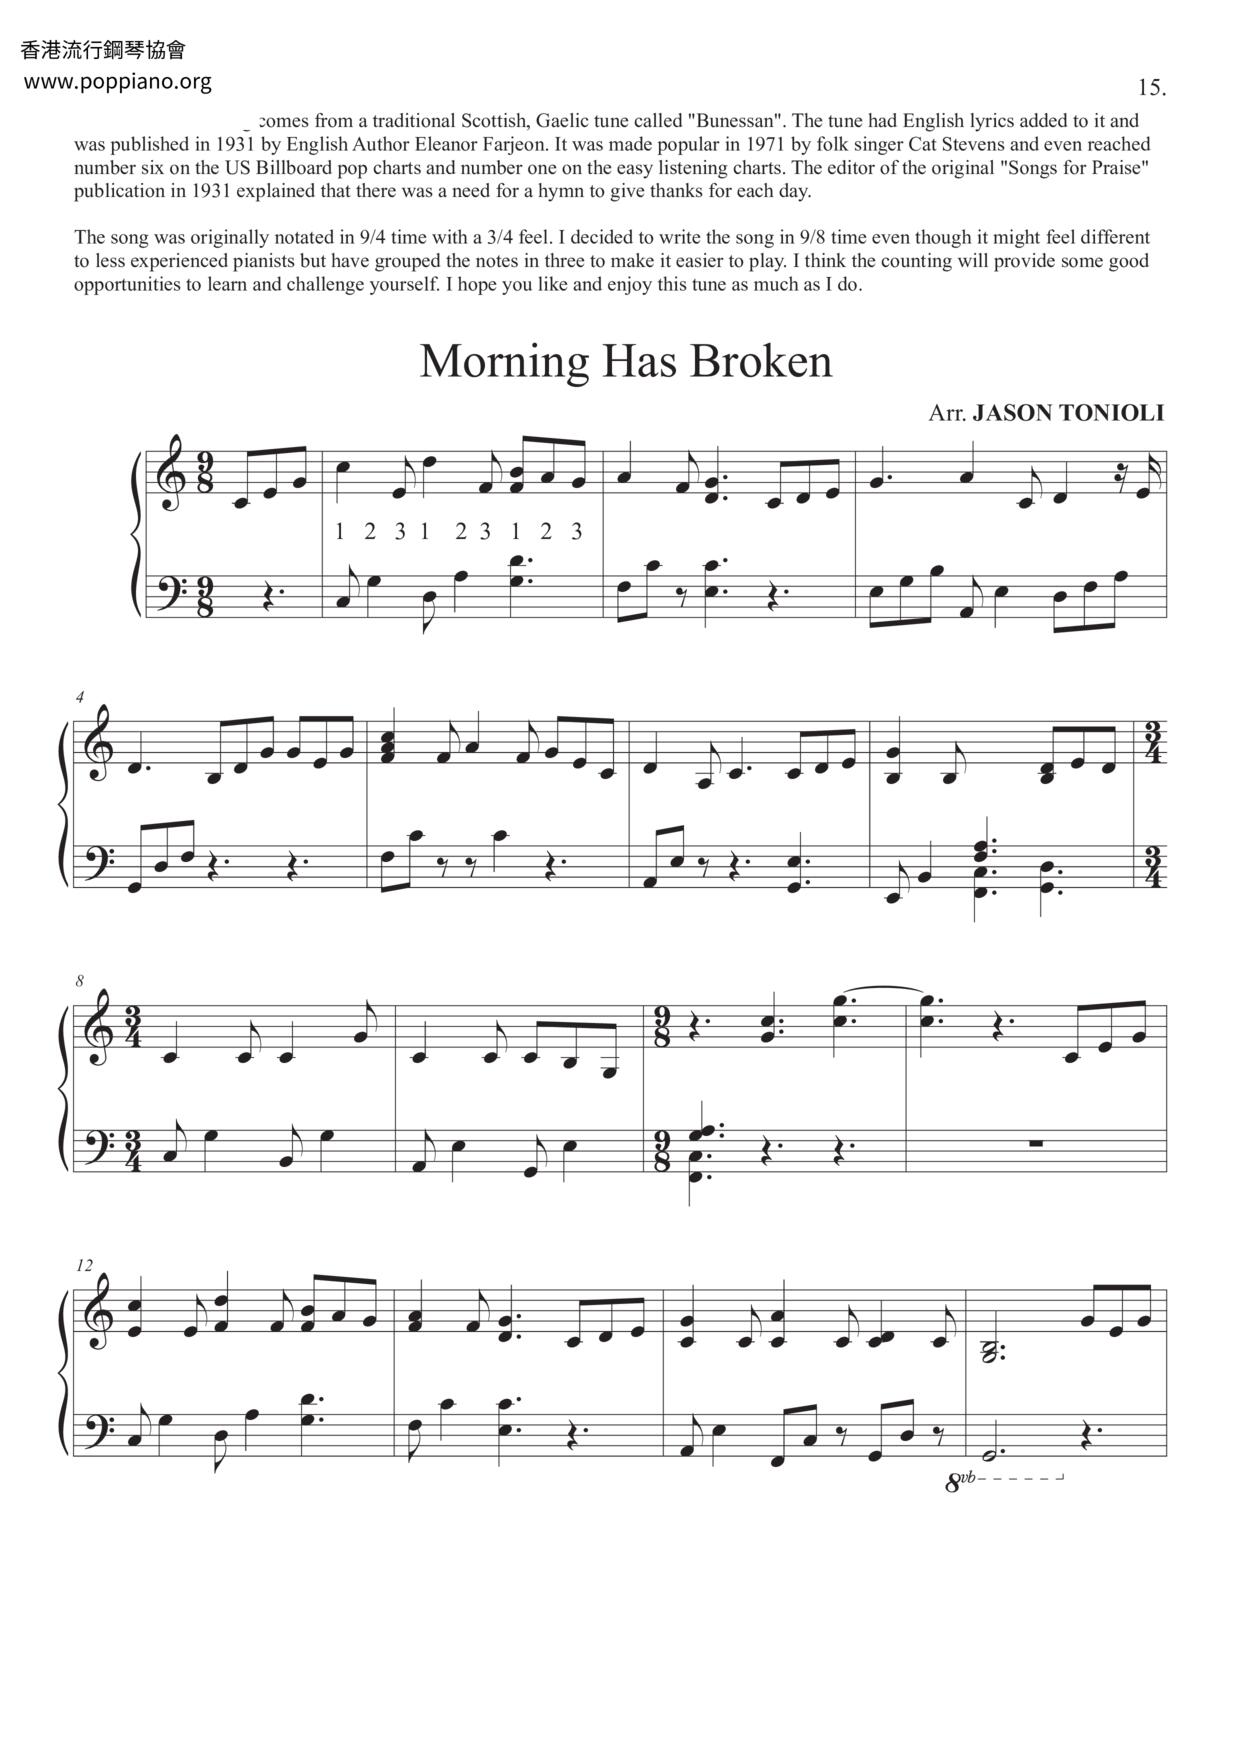 Morning Has Brokenピアノ譜